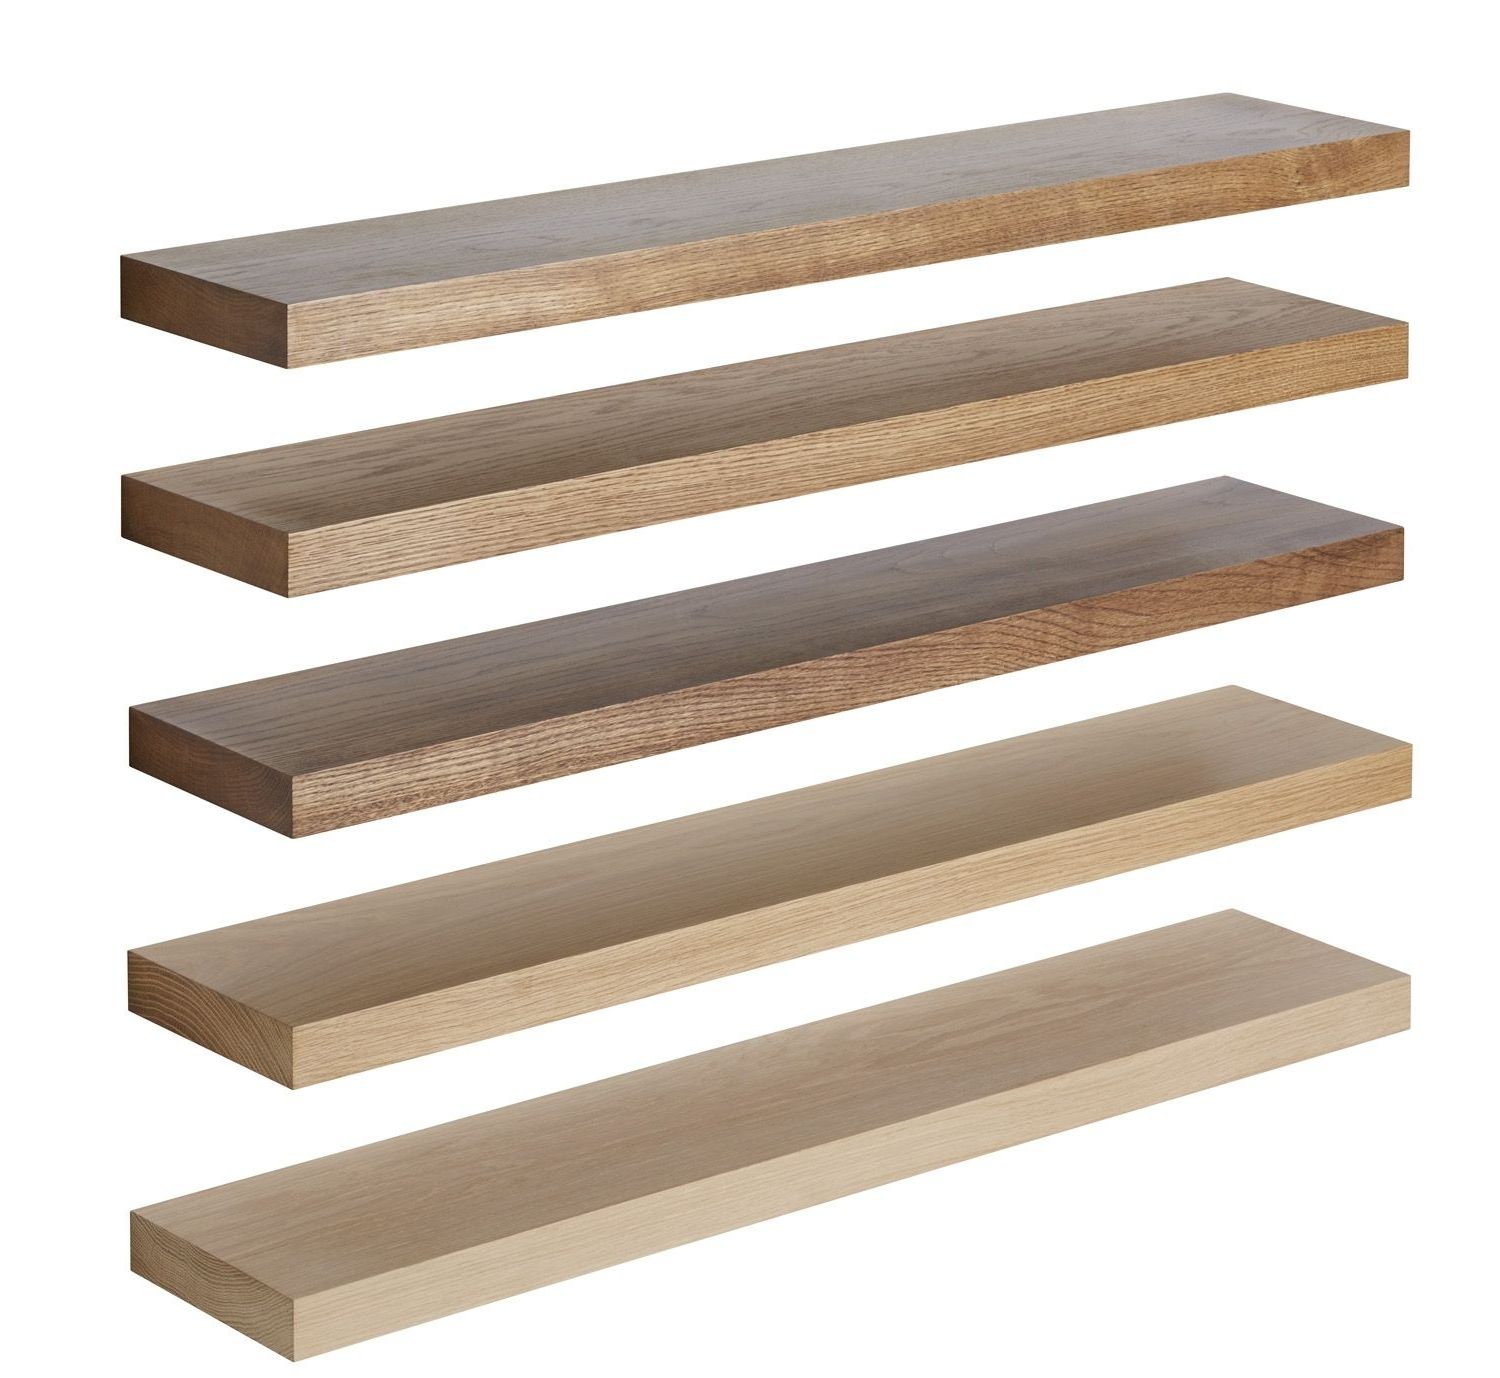 Preferred Oak Floating Shelf 32x285mm Solid American White Oak Intended For Oak Shelves (View 6 of 15)